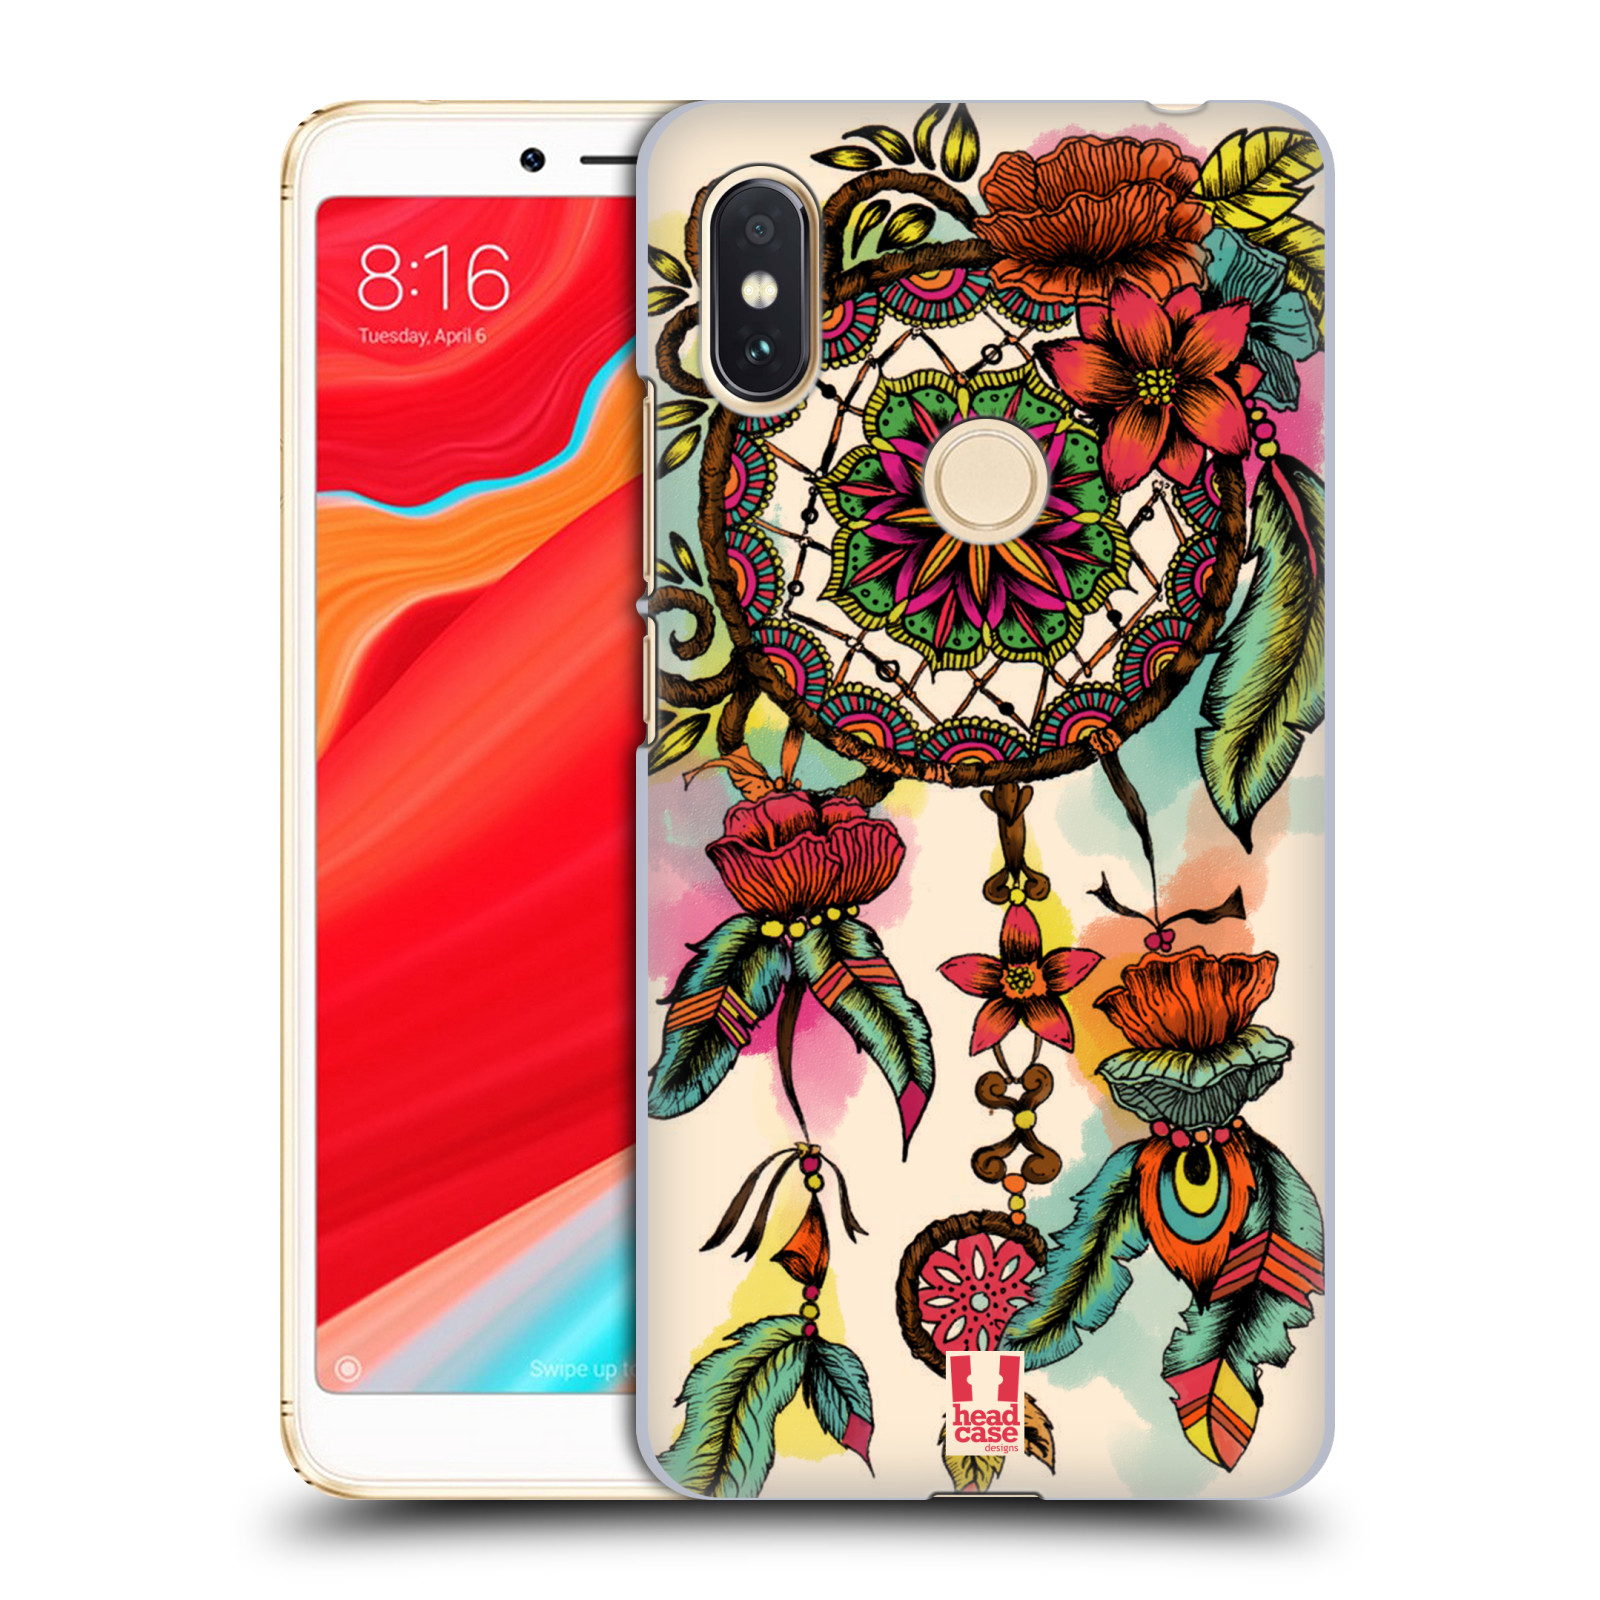 HEAD CASE plastový obal na mobil Xiaomi Redmi S2 vzor Květy lapač snů FLORID